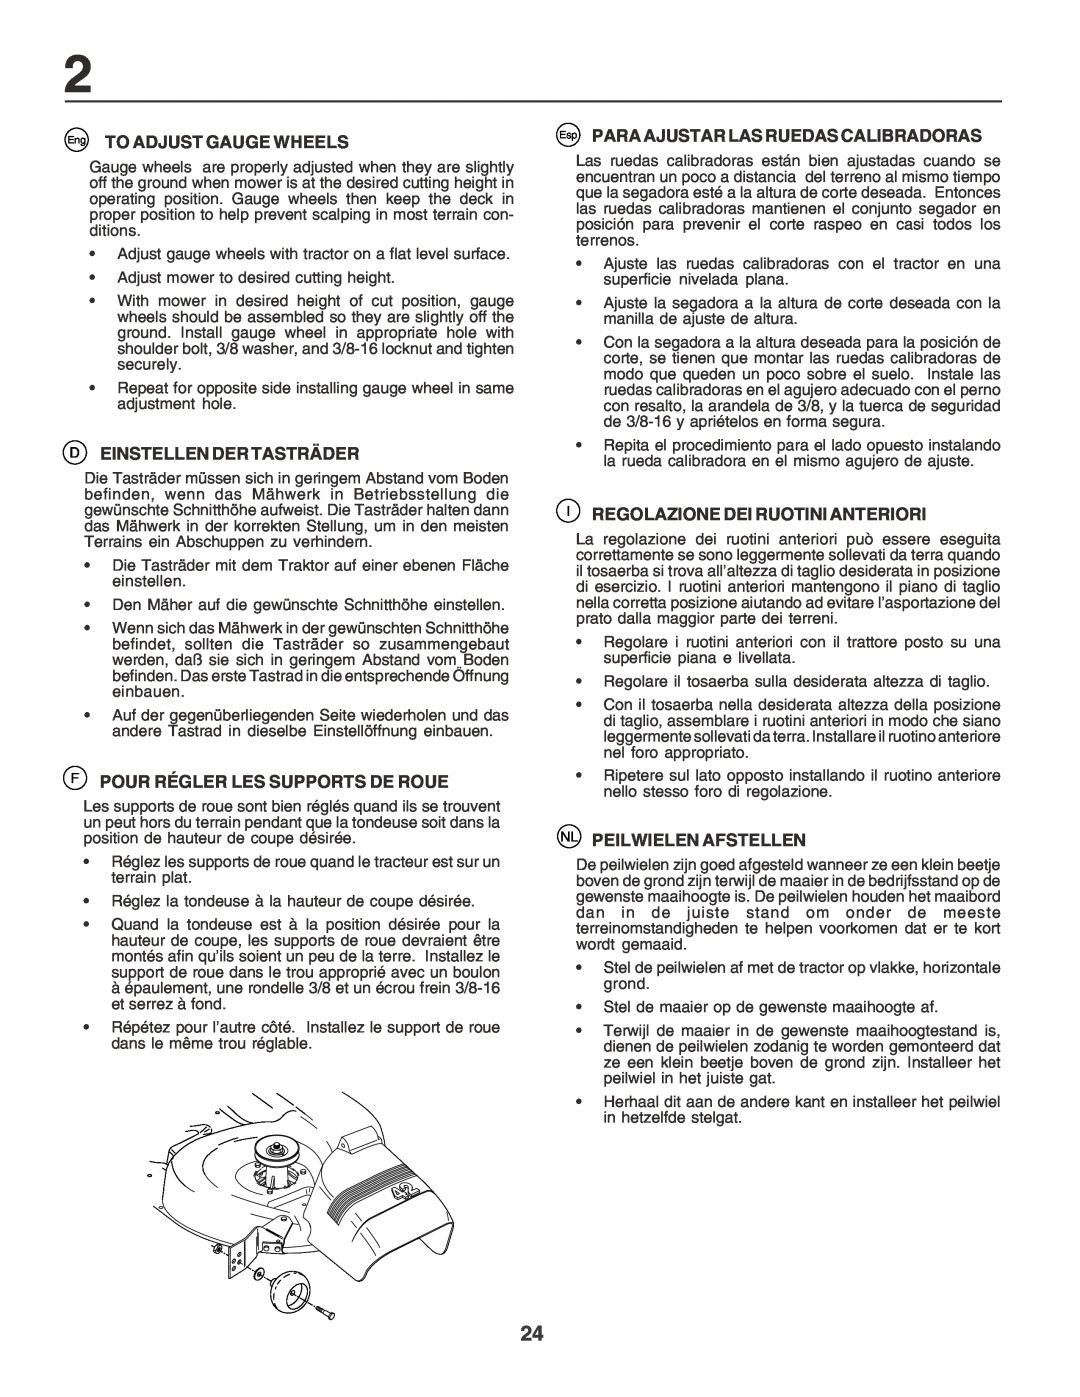 Husqvarna YT155 instruction manual Eng TO ADJUST GAUGE WHEELS, Einstellen Der Tasträder, F Pour Régler Les Supports De Roue 